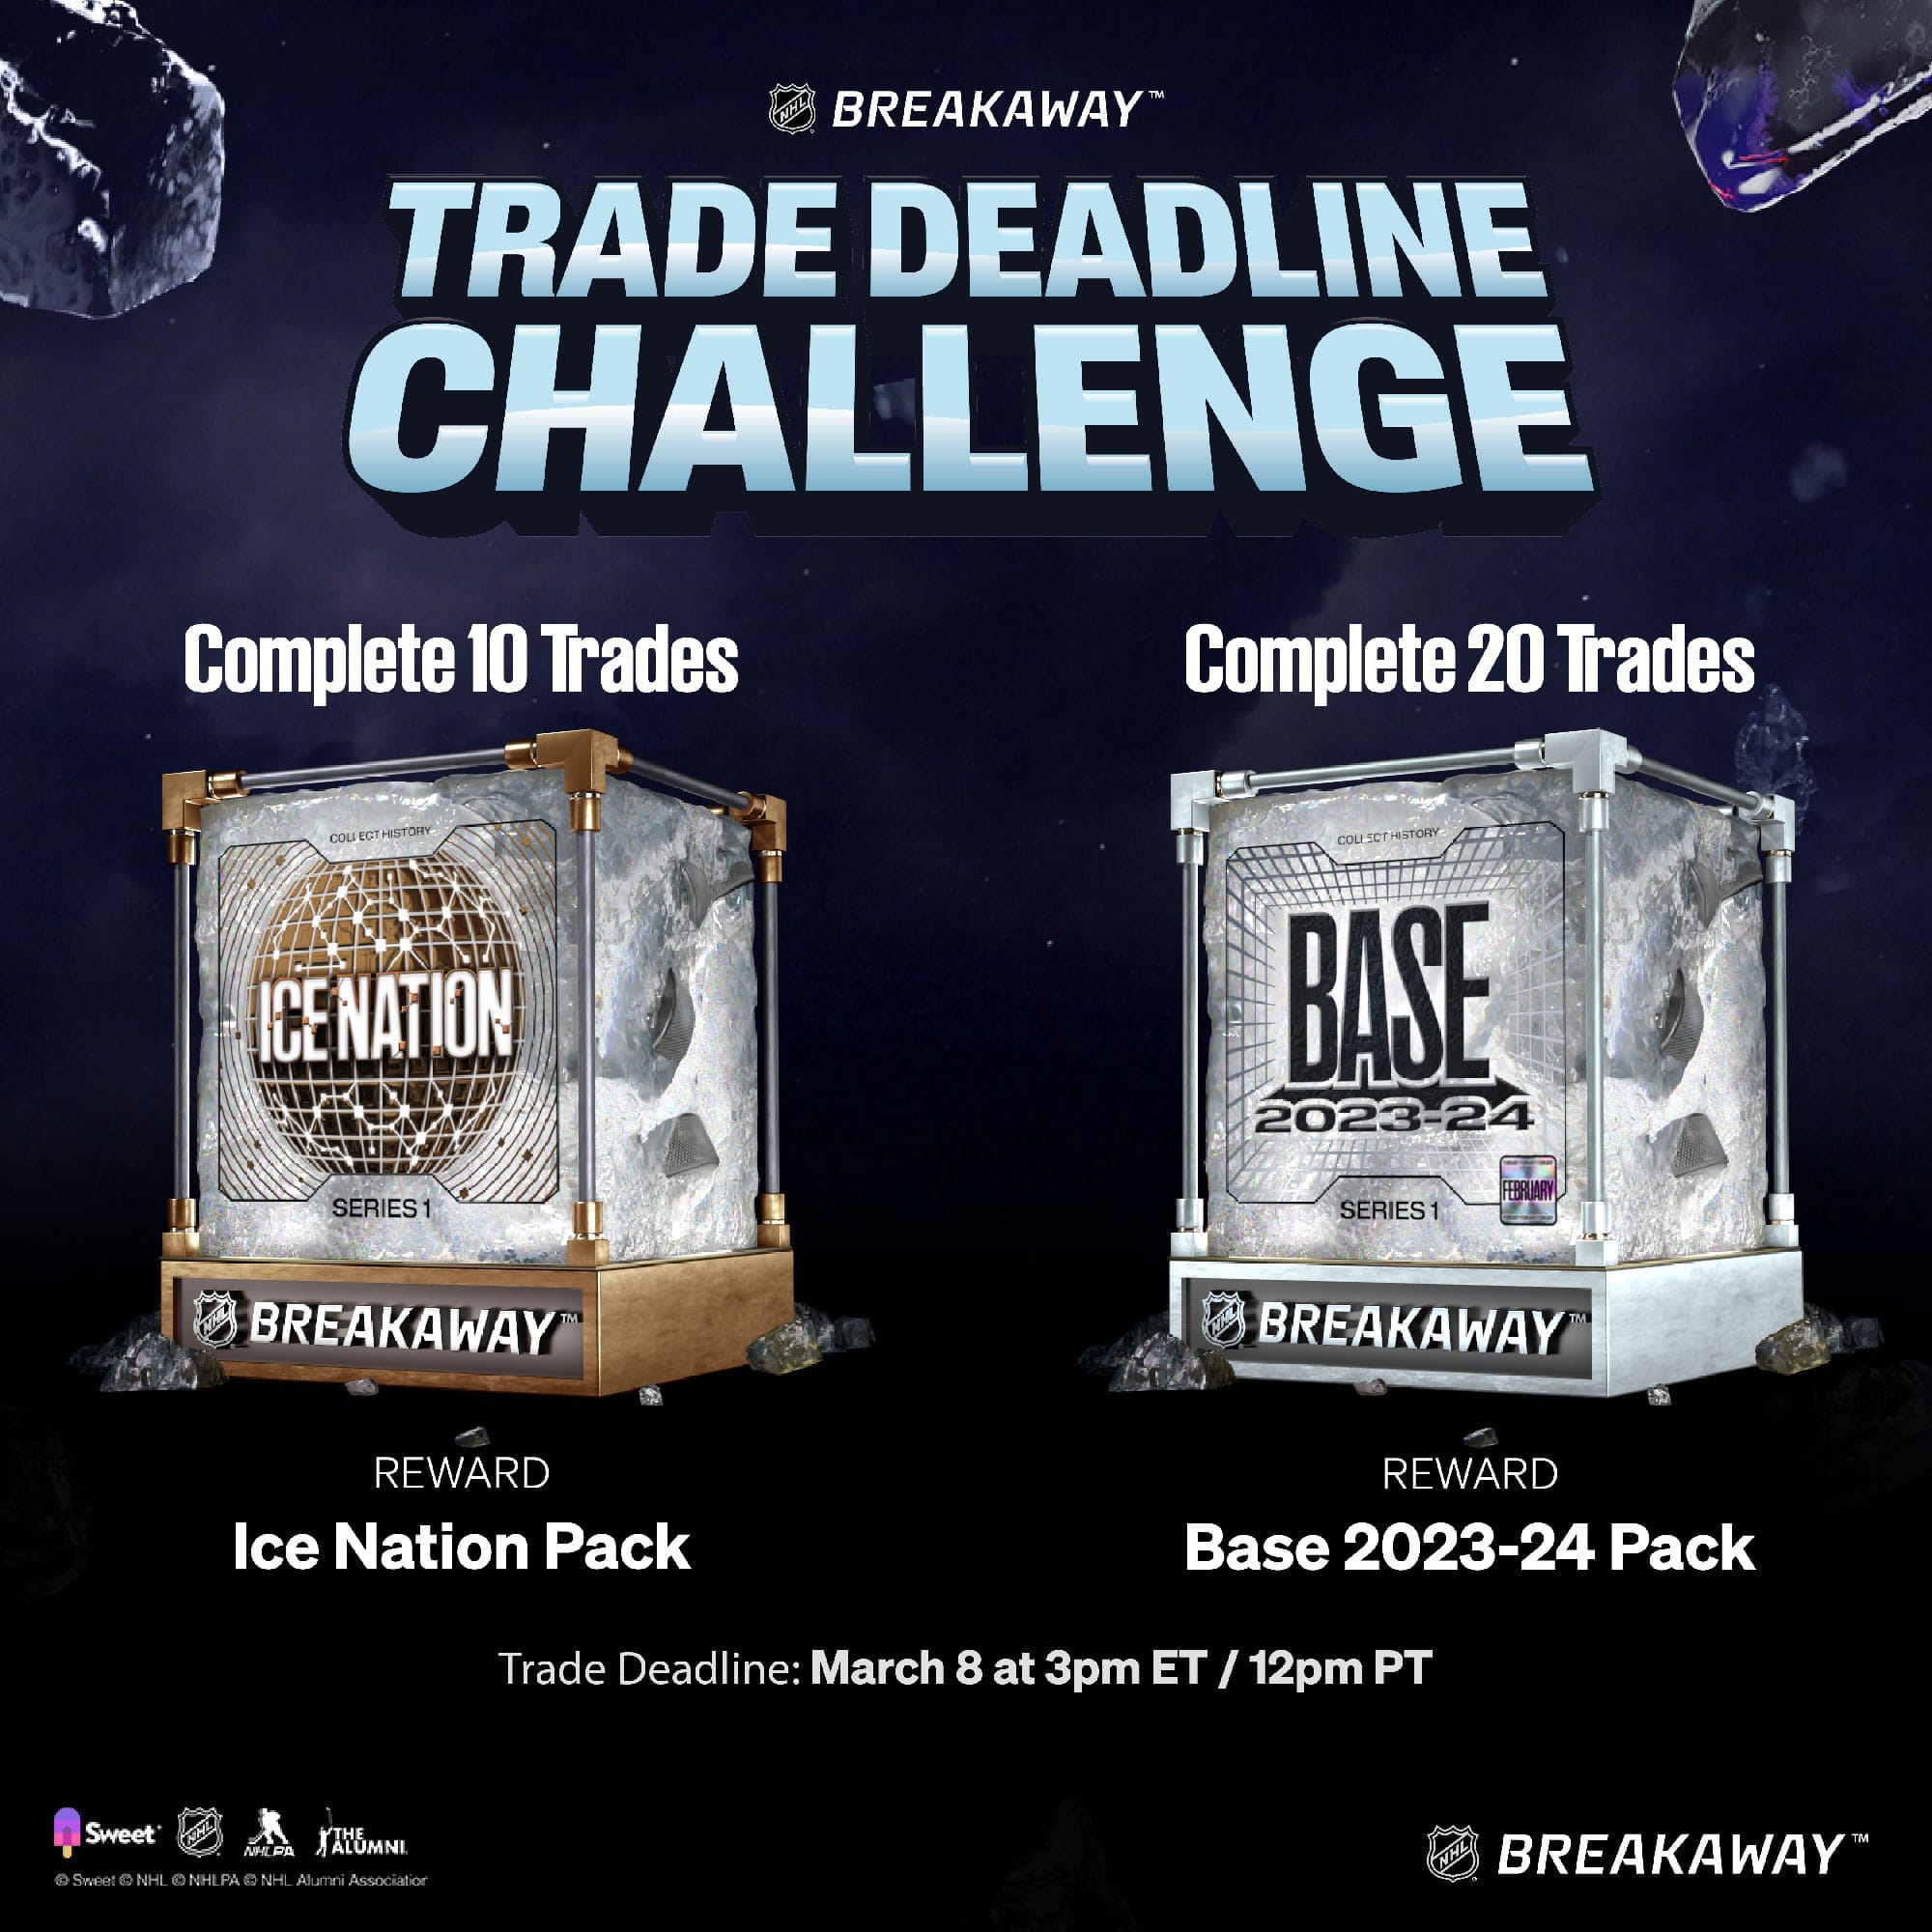 Introducing the Trade Deadline Challenge